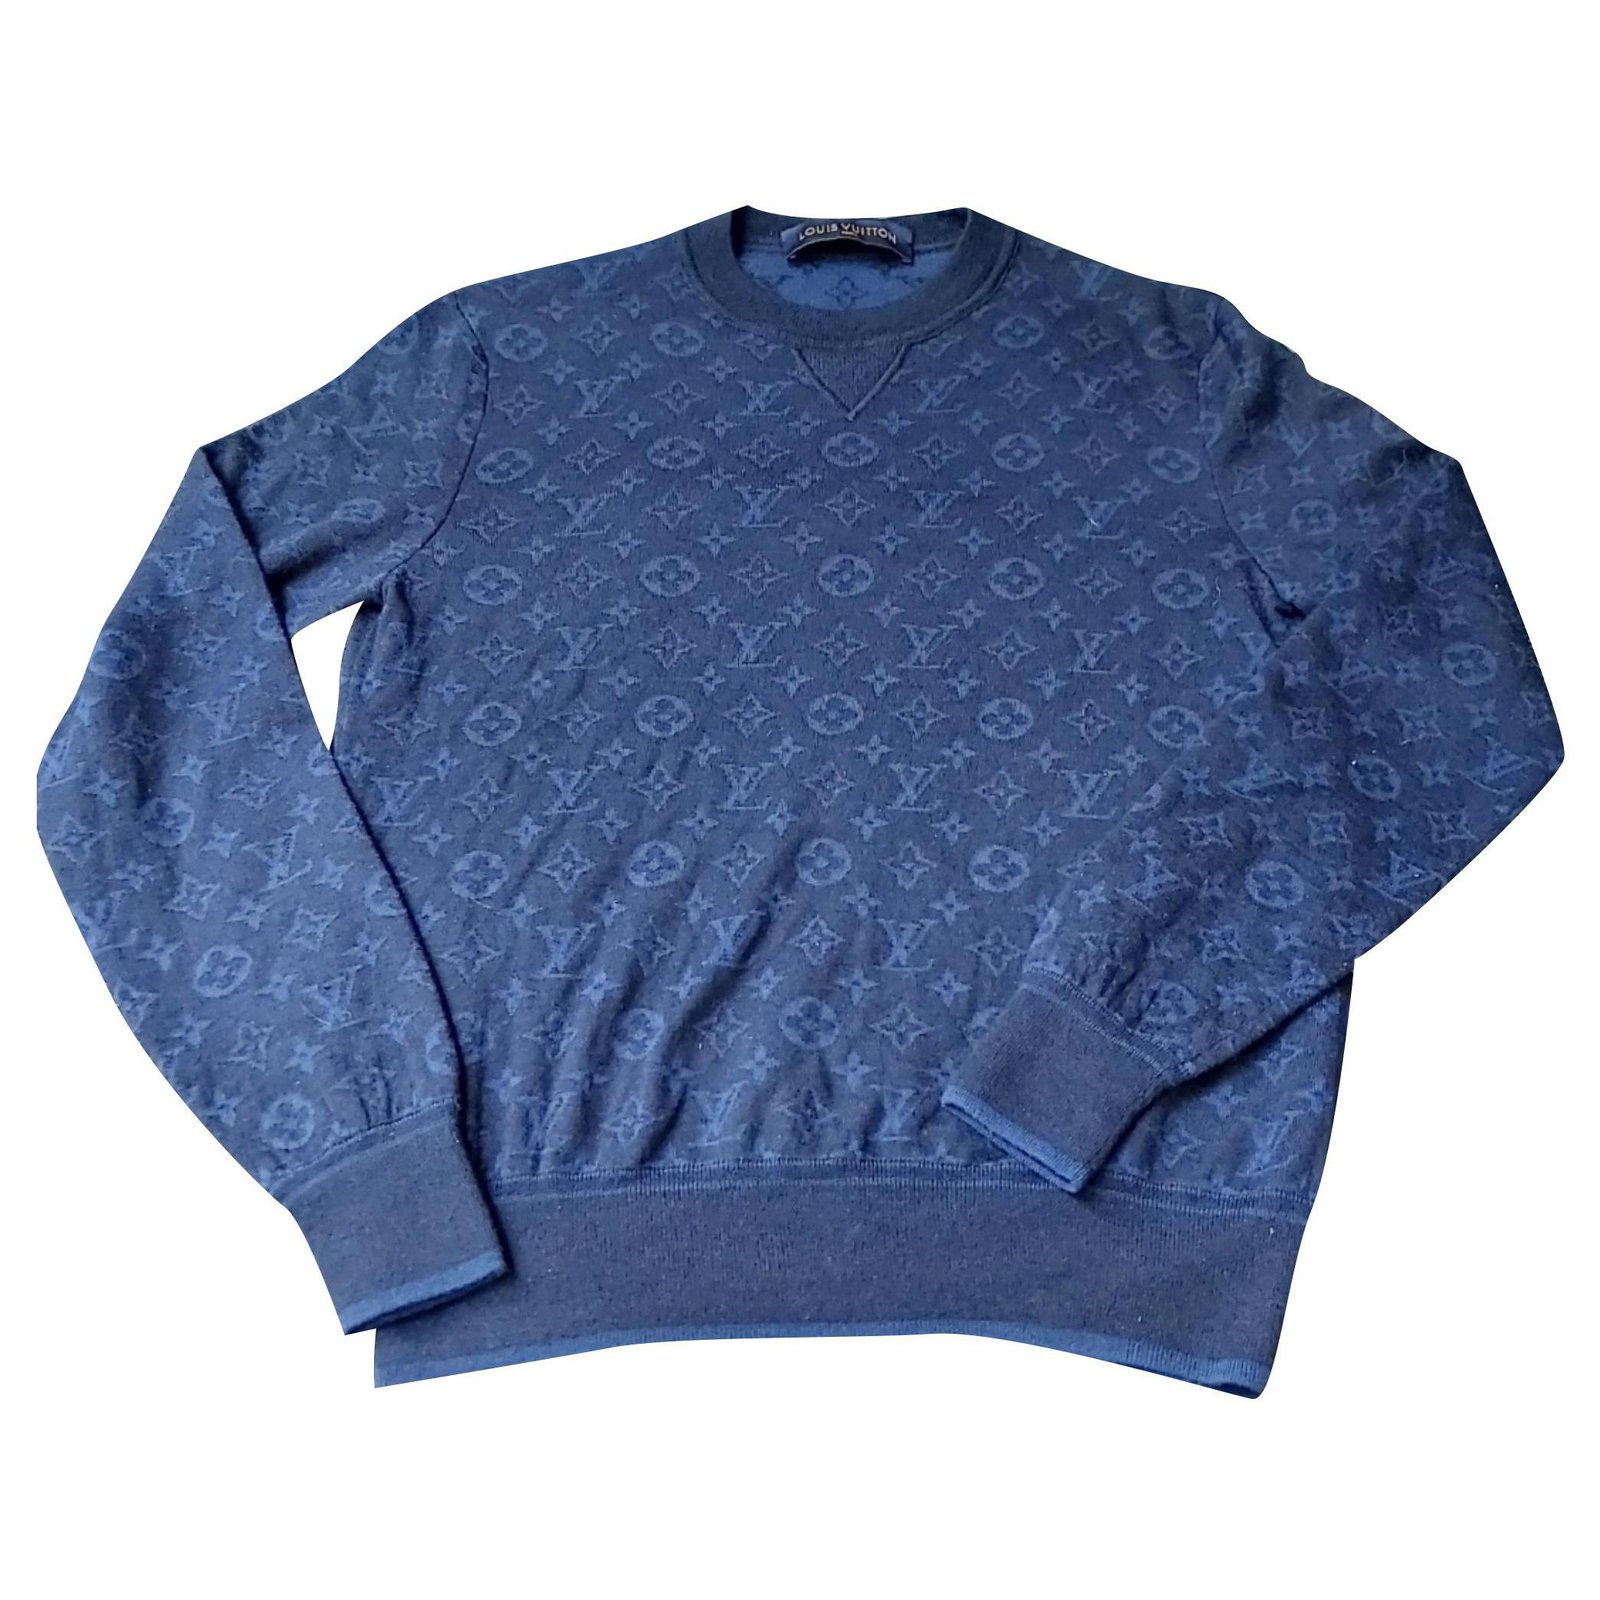 blue lv sweater mens